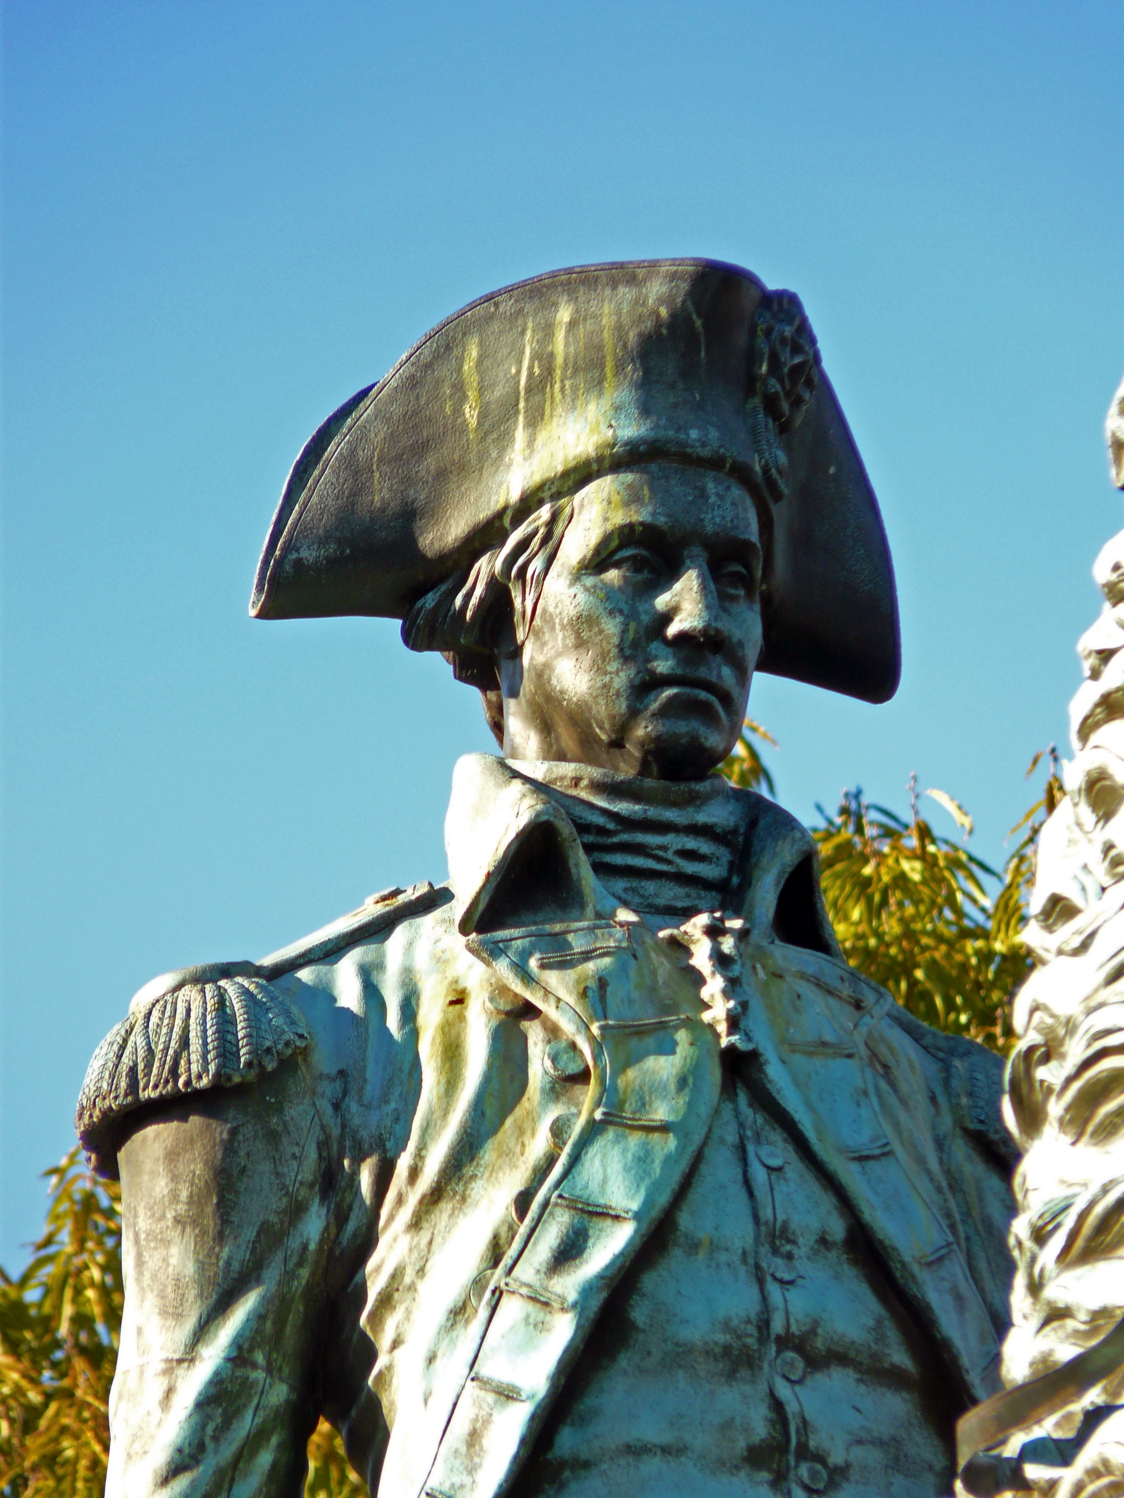 Equestrian statue of George Washington in Washington D.C. US